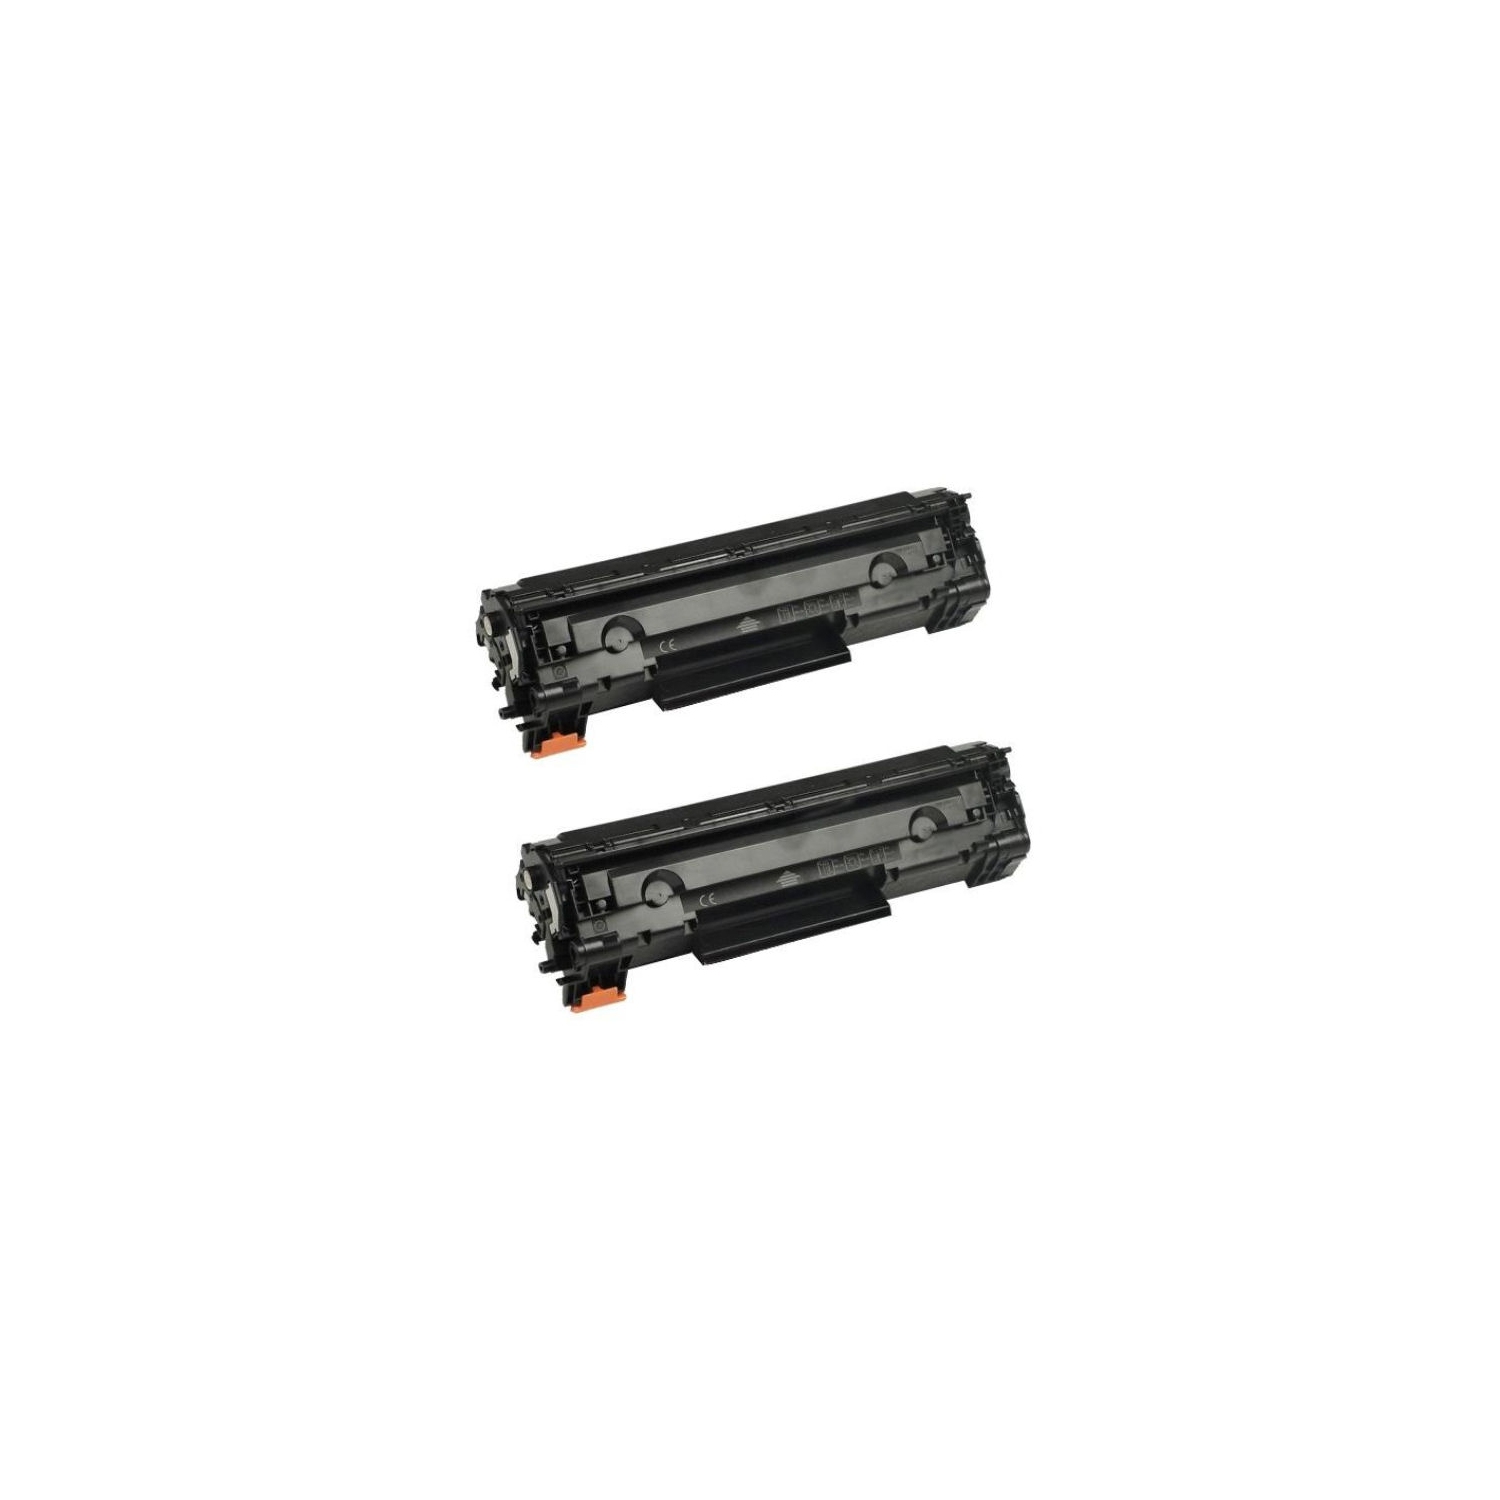 2PK CRG128 Compatible Toner Cartridge for Canon 128 L100,D550,MF4412,MF4420n,MF4450,MF4550,MF4570dn,MF4580dn ,MF4770n ,MF4880dw,MF4890dw